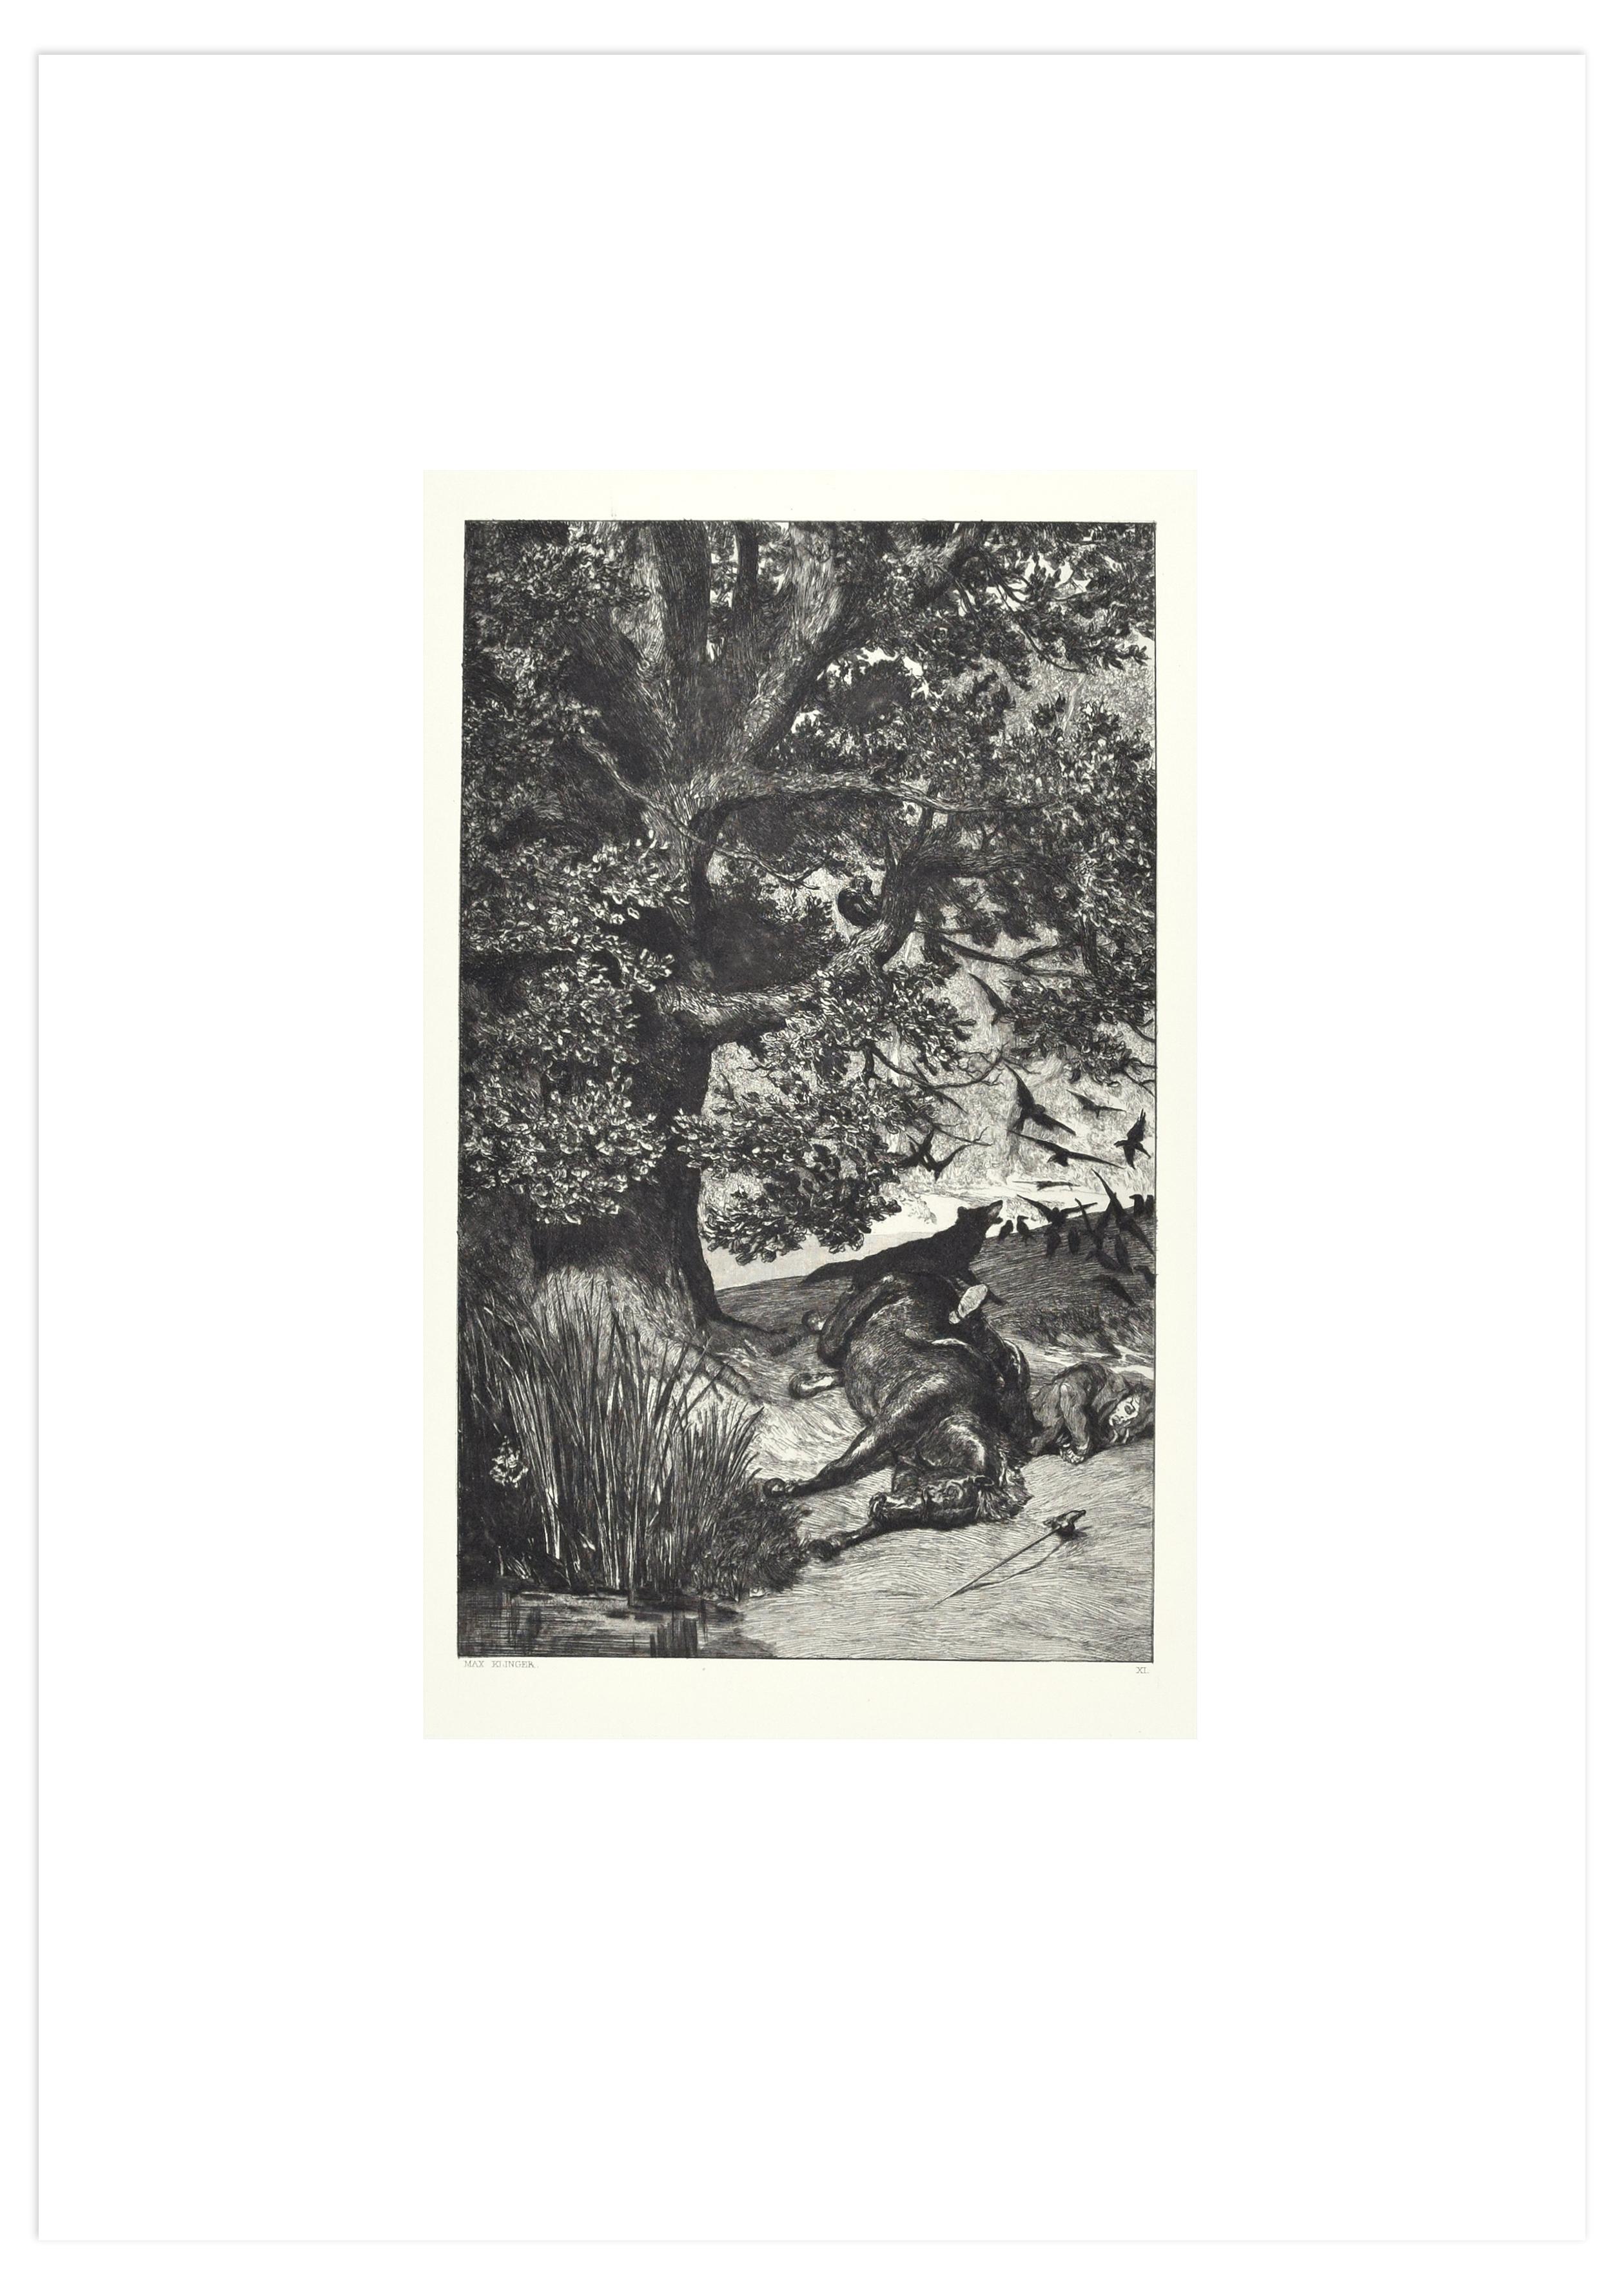 Fallen Knight -  Etching by M. Klinger - 1881 - Print by Max Klinger